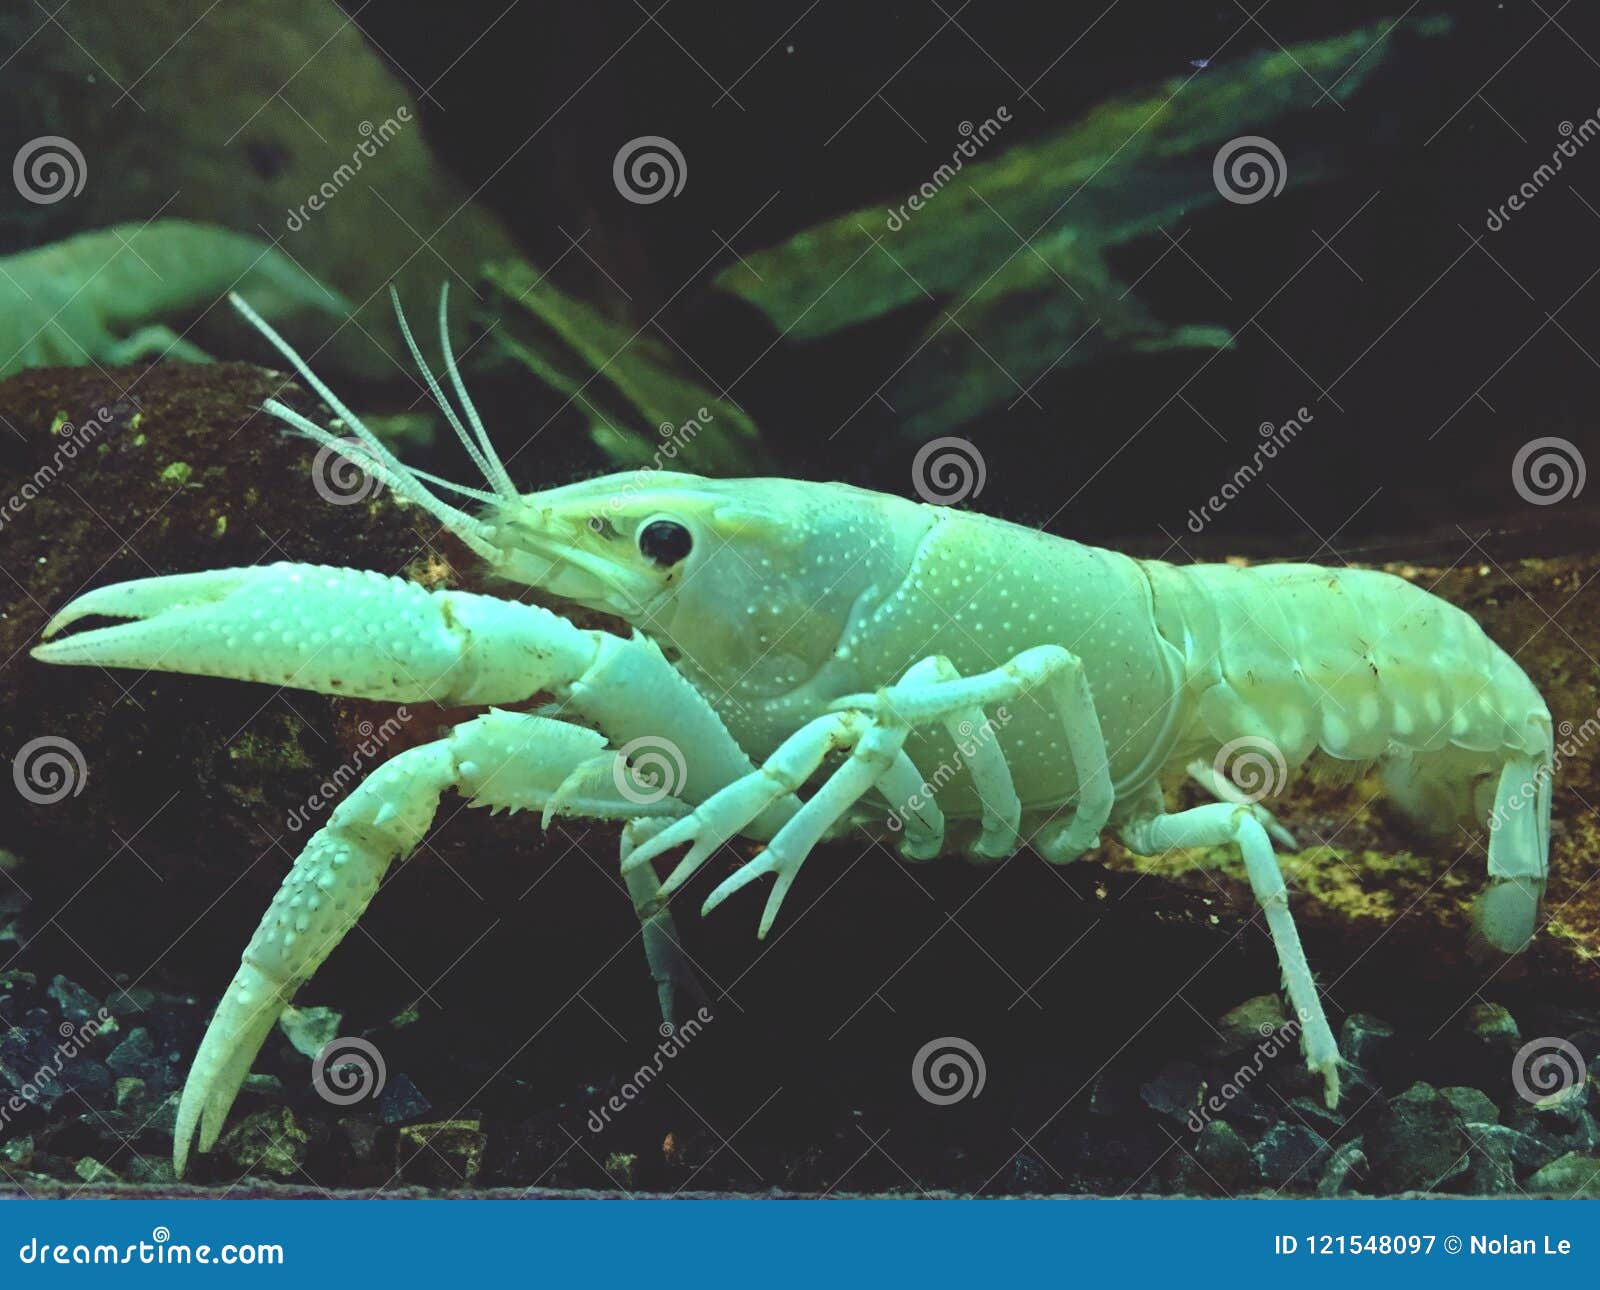 whiteshrimp, shrimp, deep in the sea